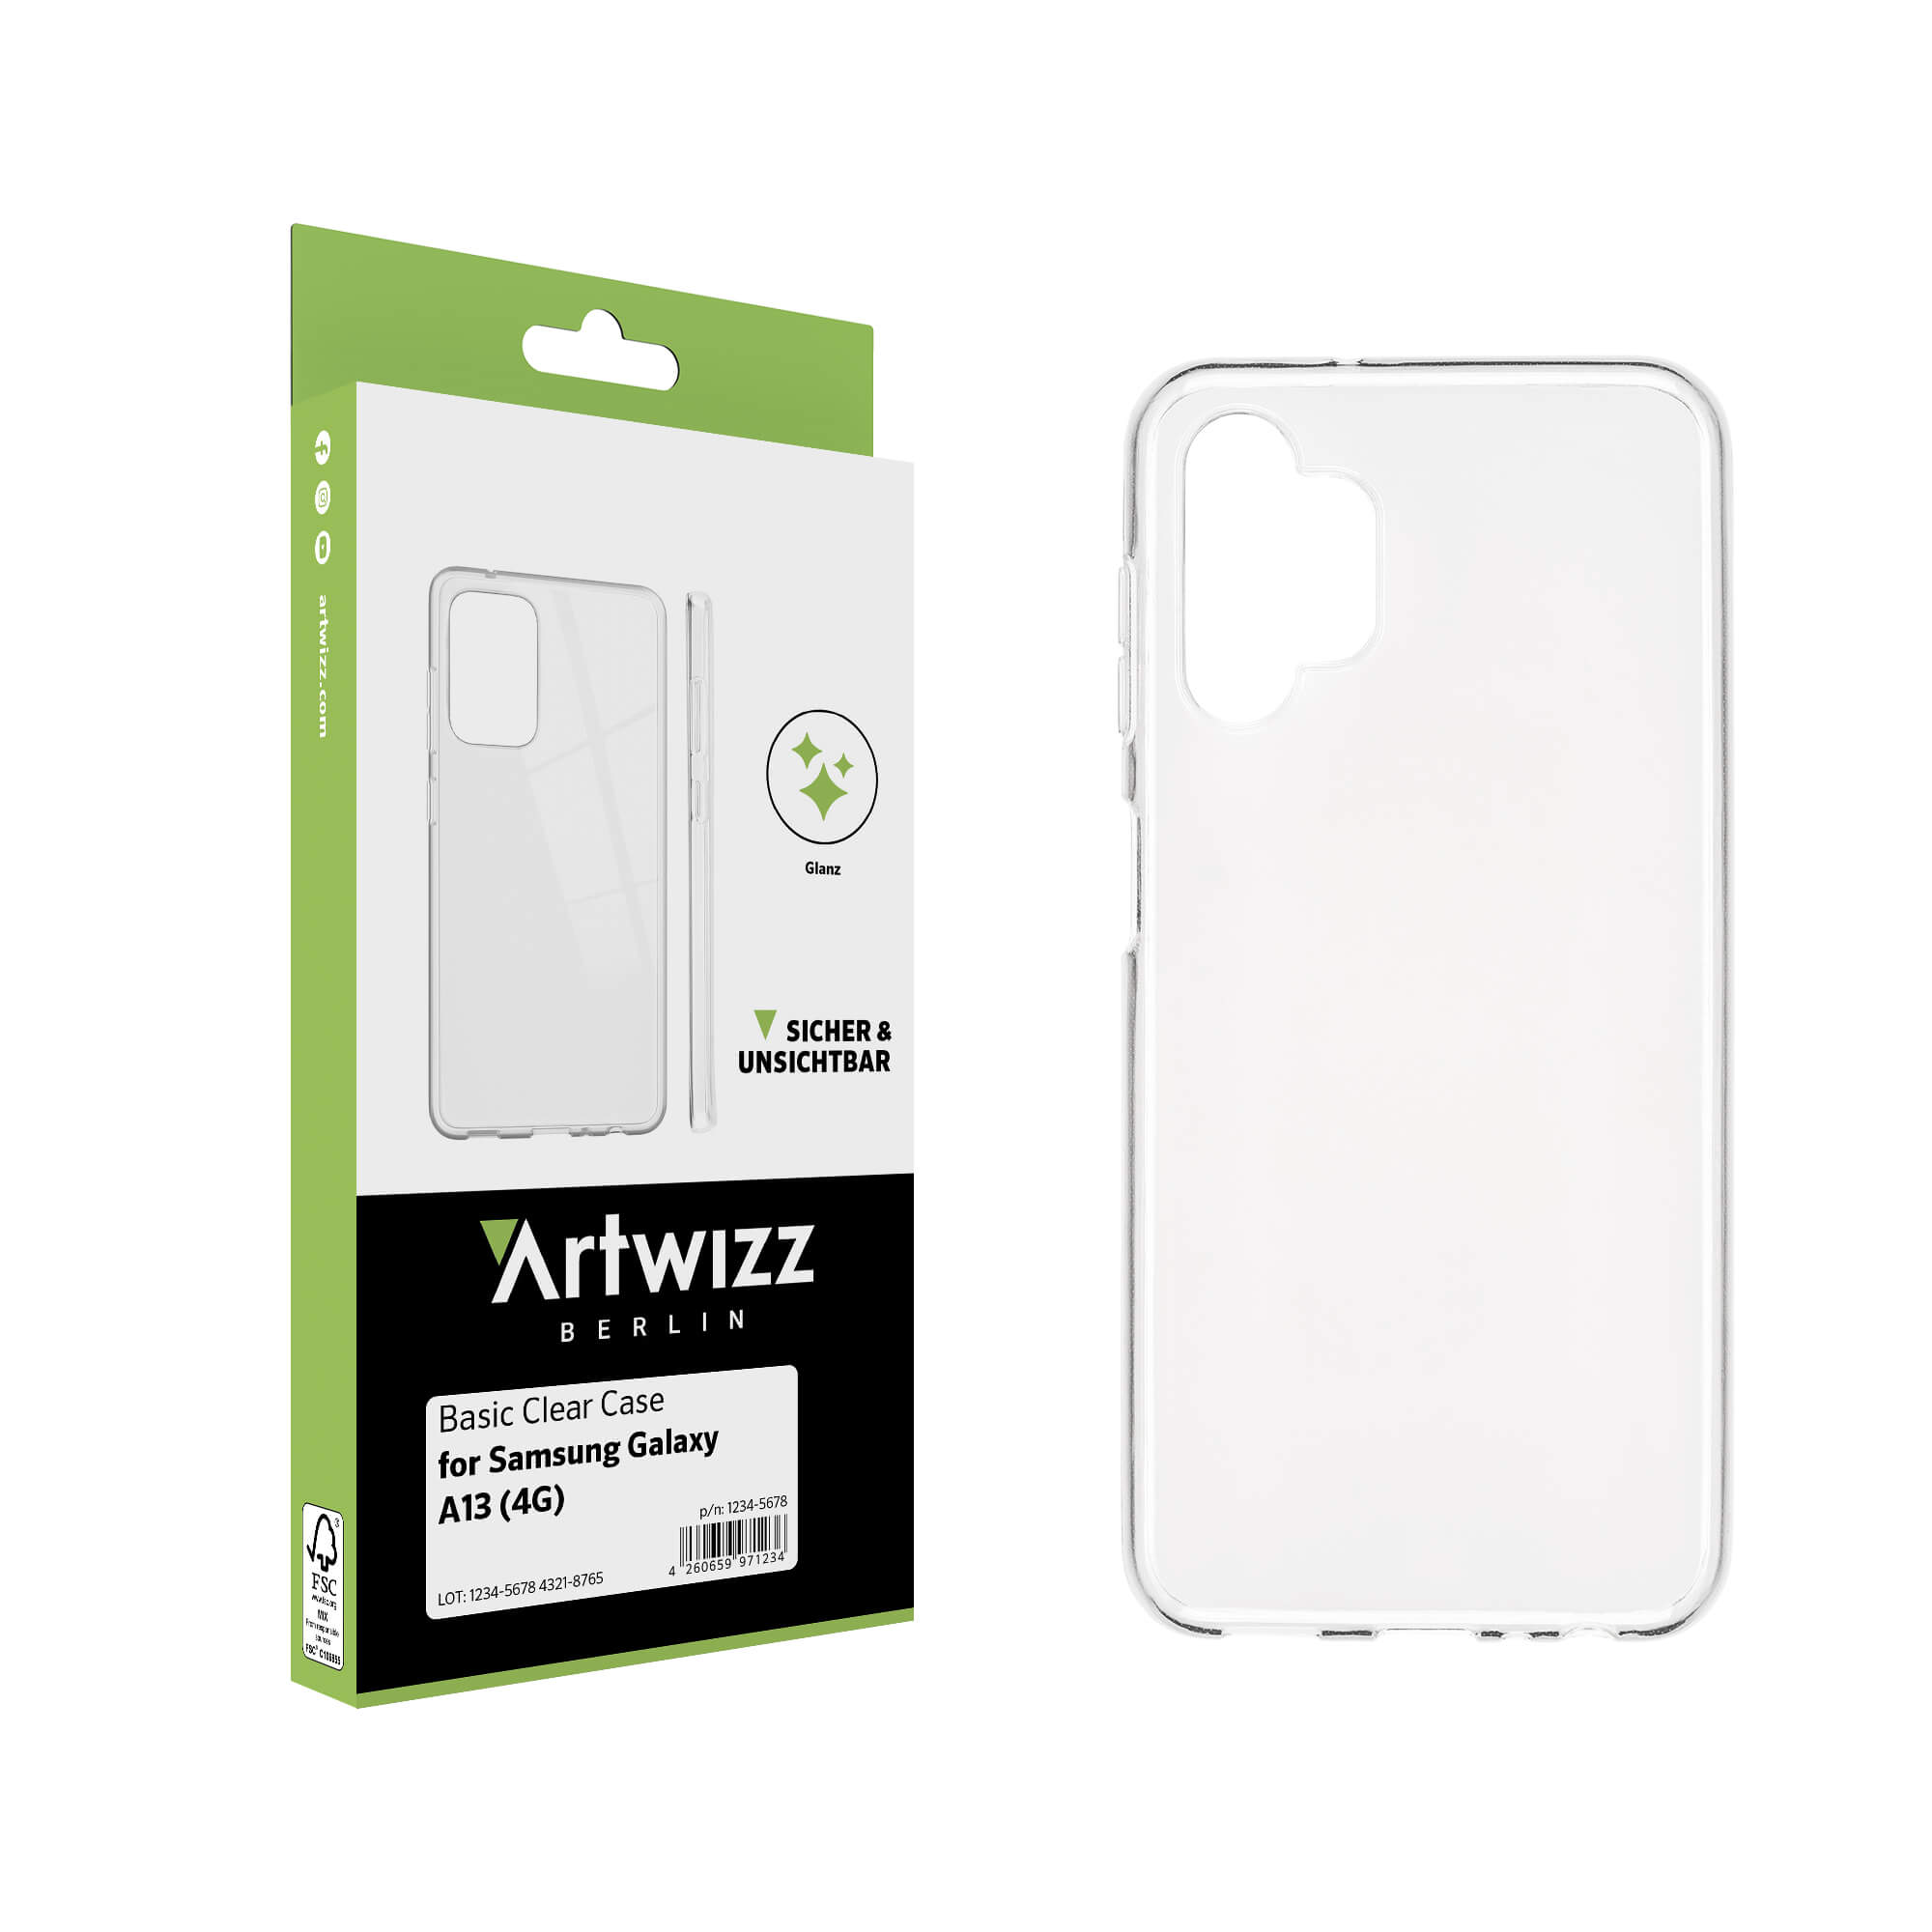 ARTWIZZ Basic Clear Case, Backcover, Samsung, Transparent (4G), Galaxy A13